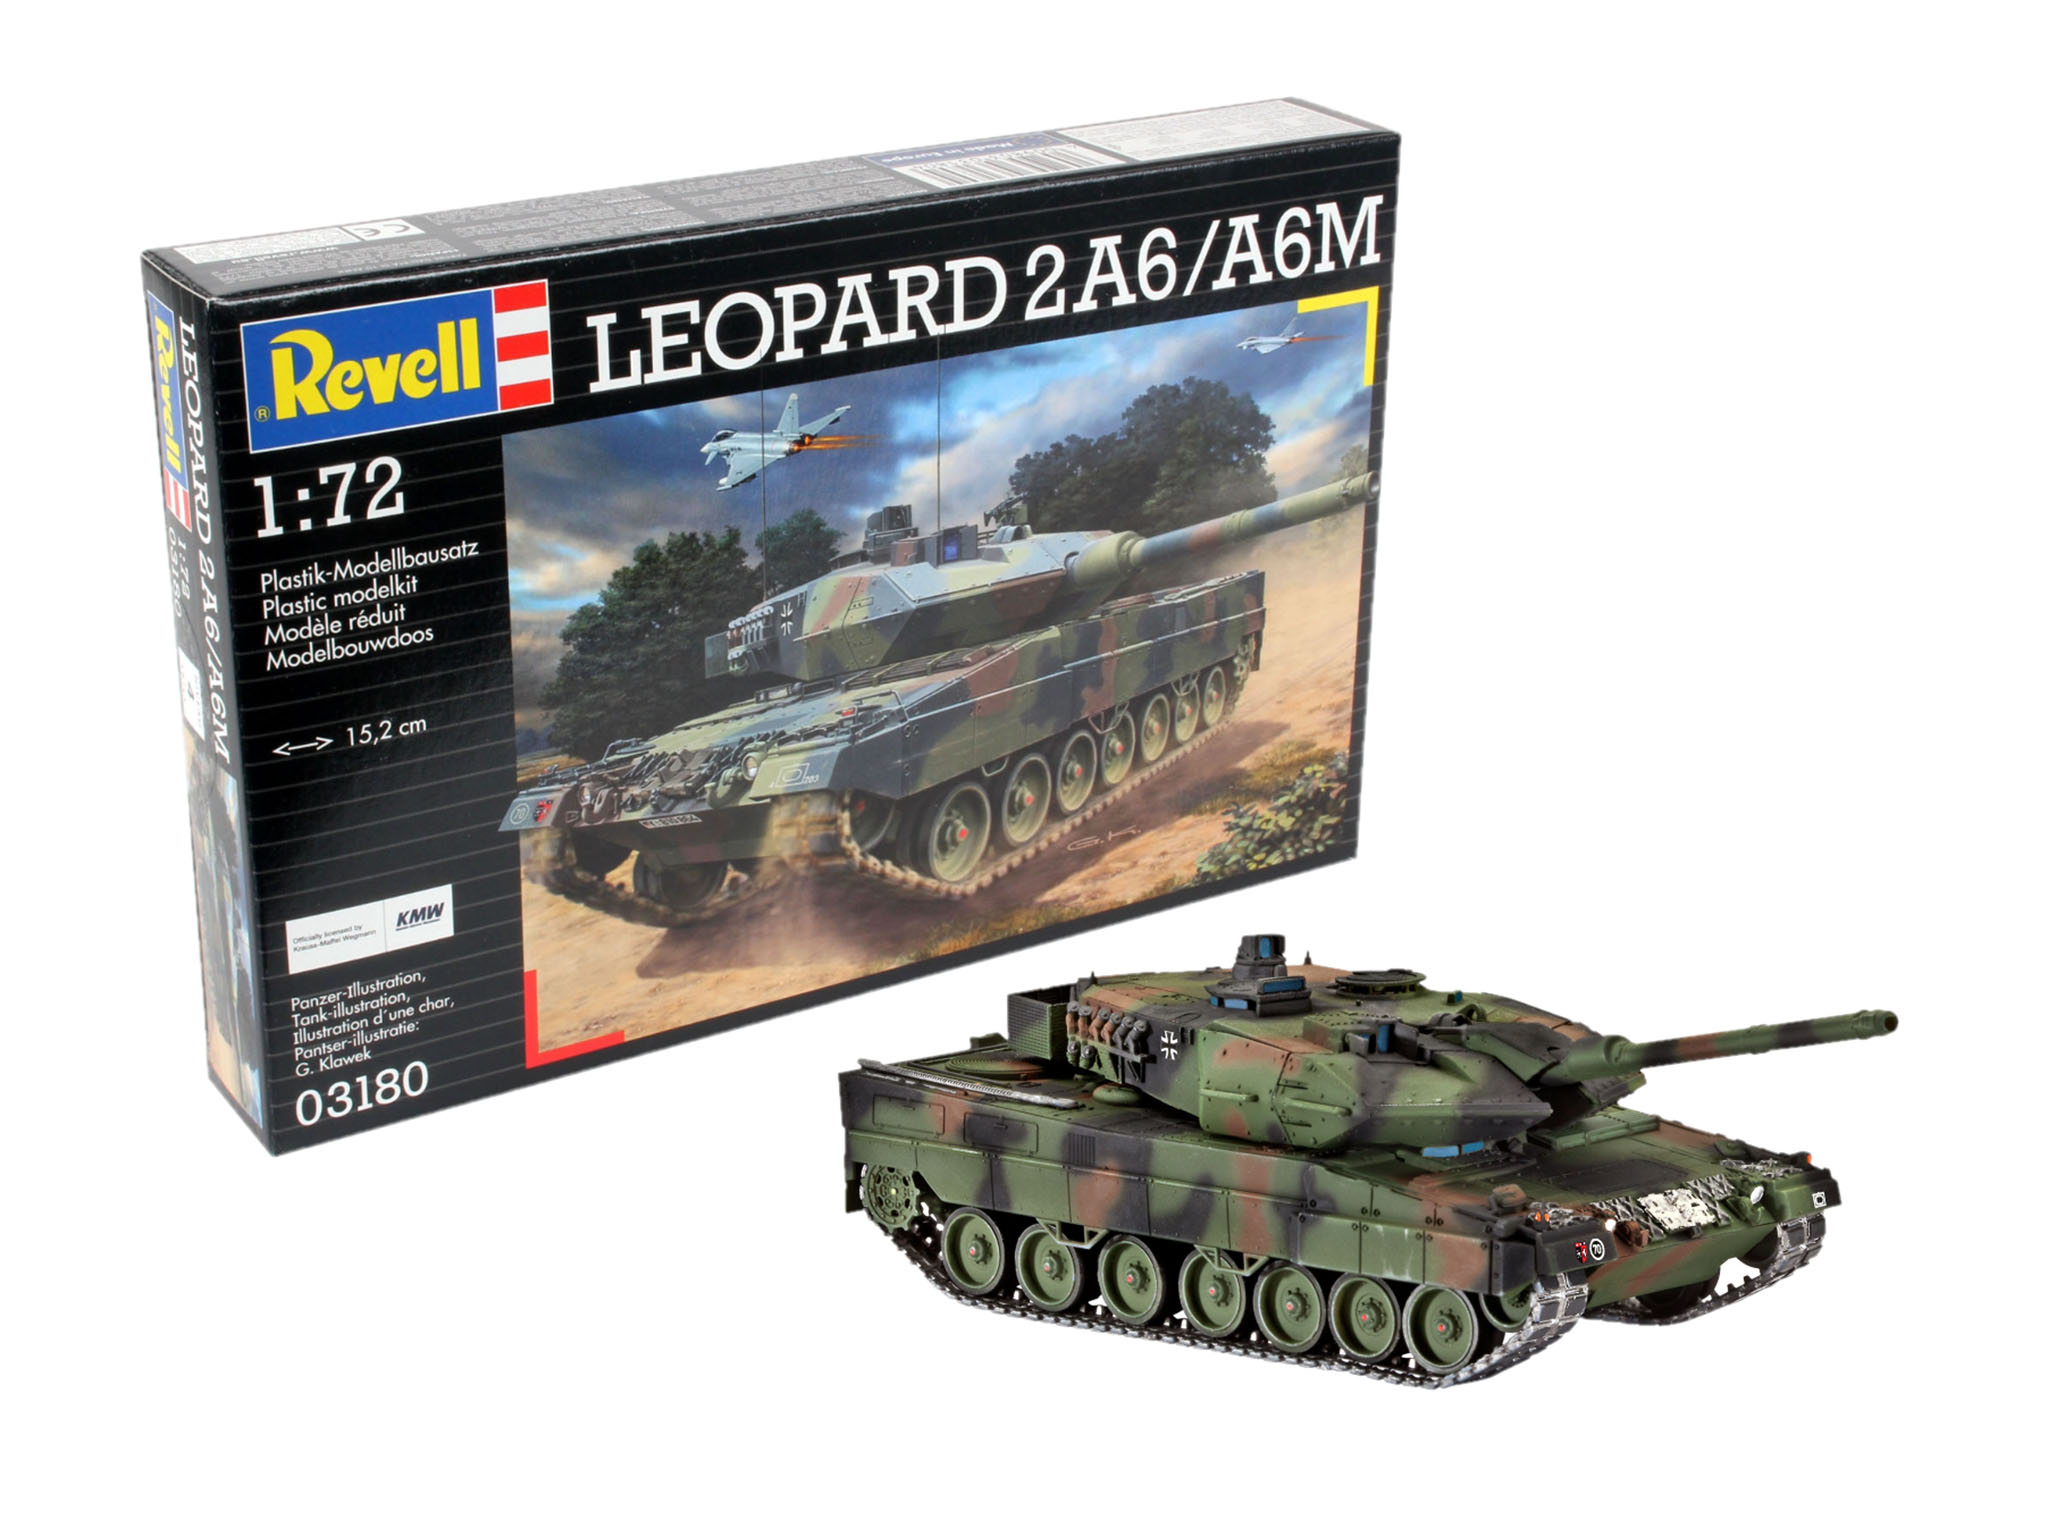 Leopard 2A6/A6M - 03180